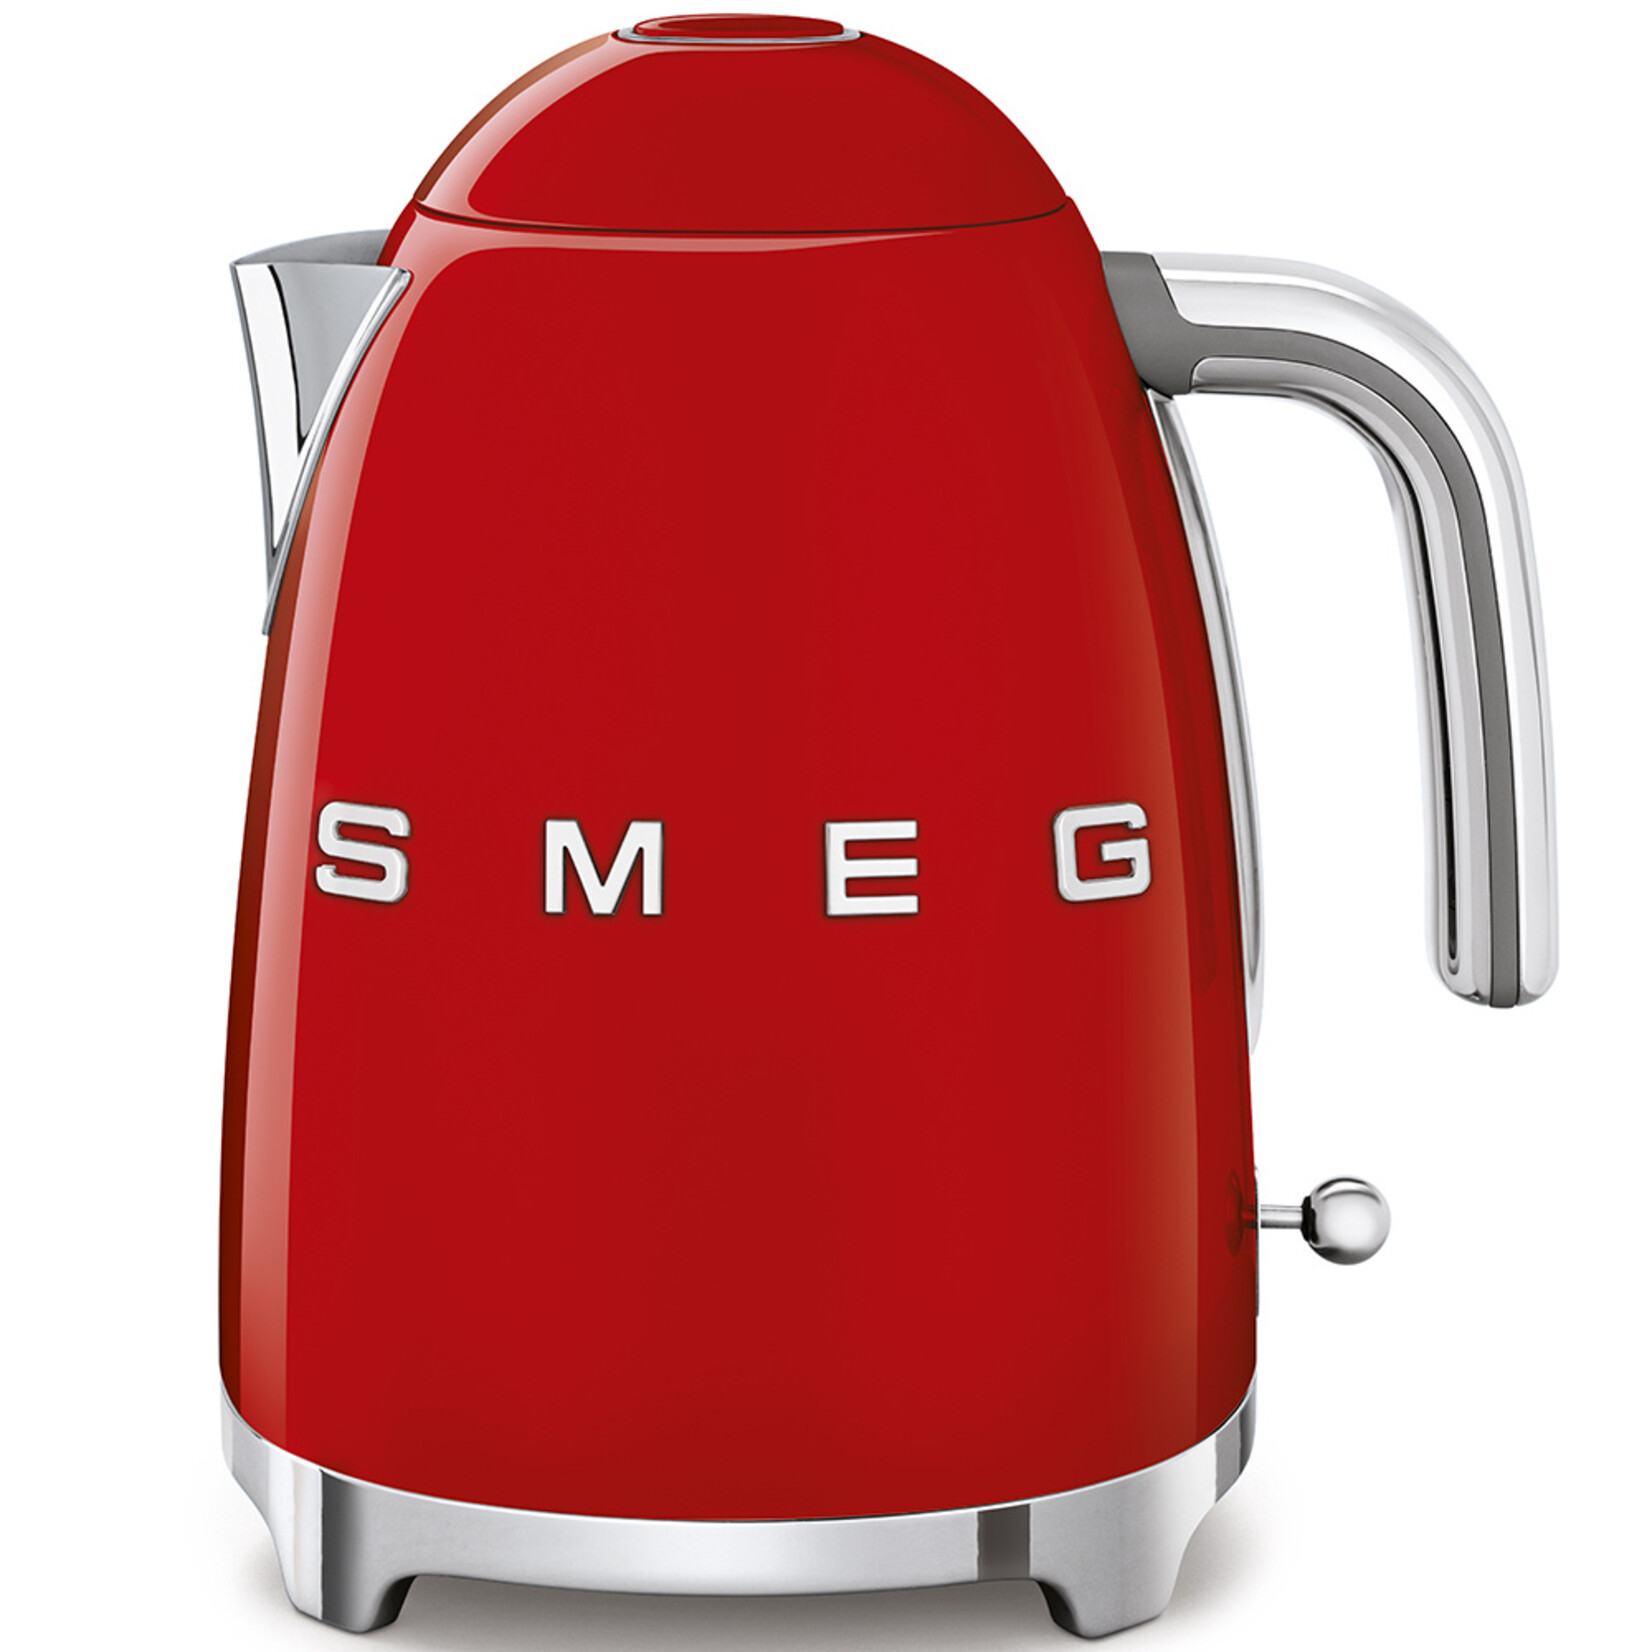 https://cdn.shoplightspeed.com/shops/659299/files/51862630/1652x1652x2/smeg-50s-retro-style-aesthetic-7-cup-kettle.jpg